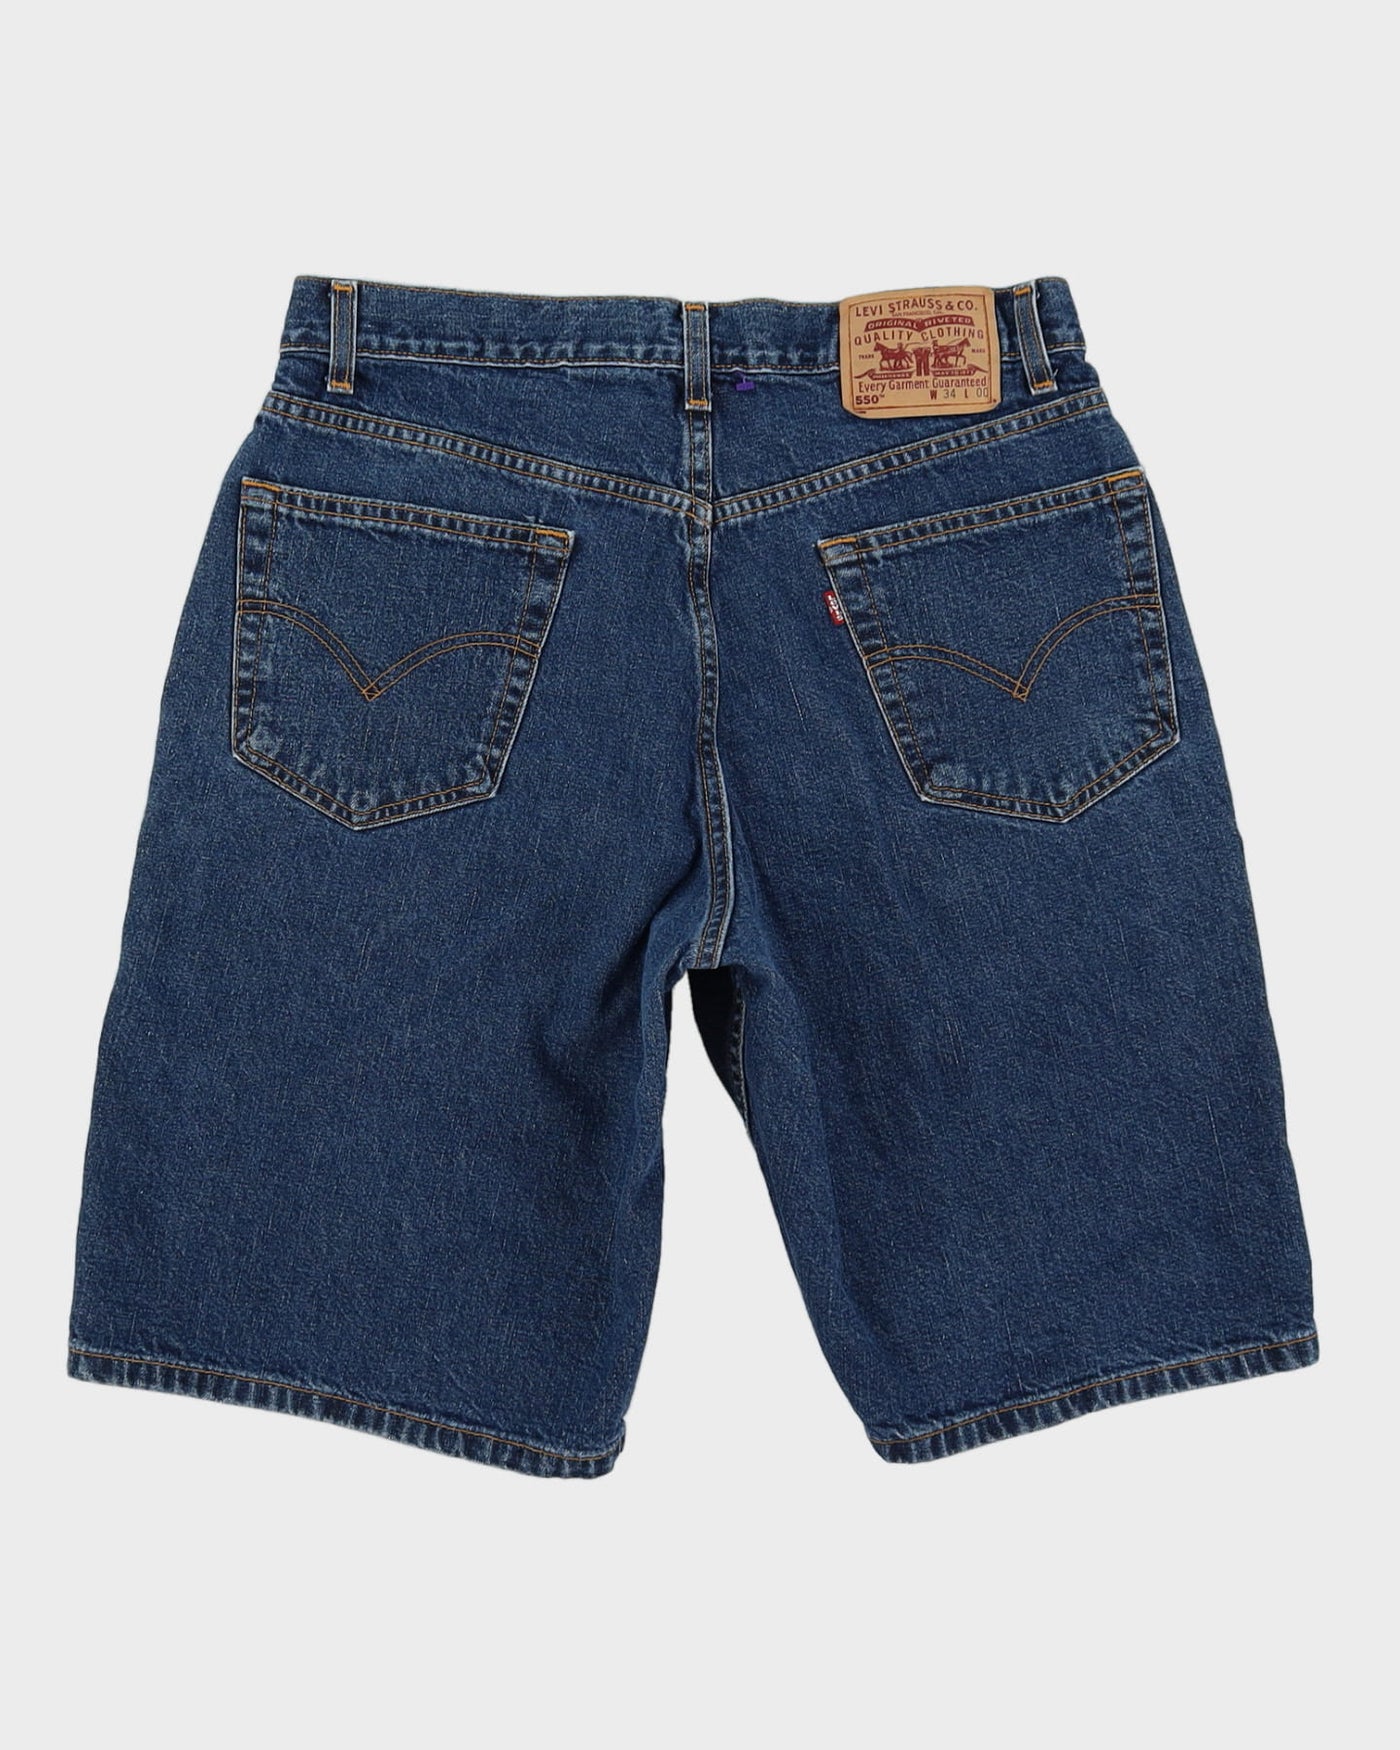 Levi's Blue Denim Shorts - W34